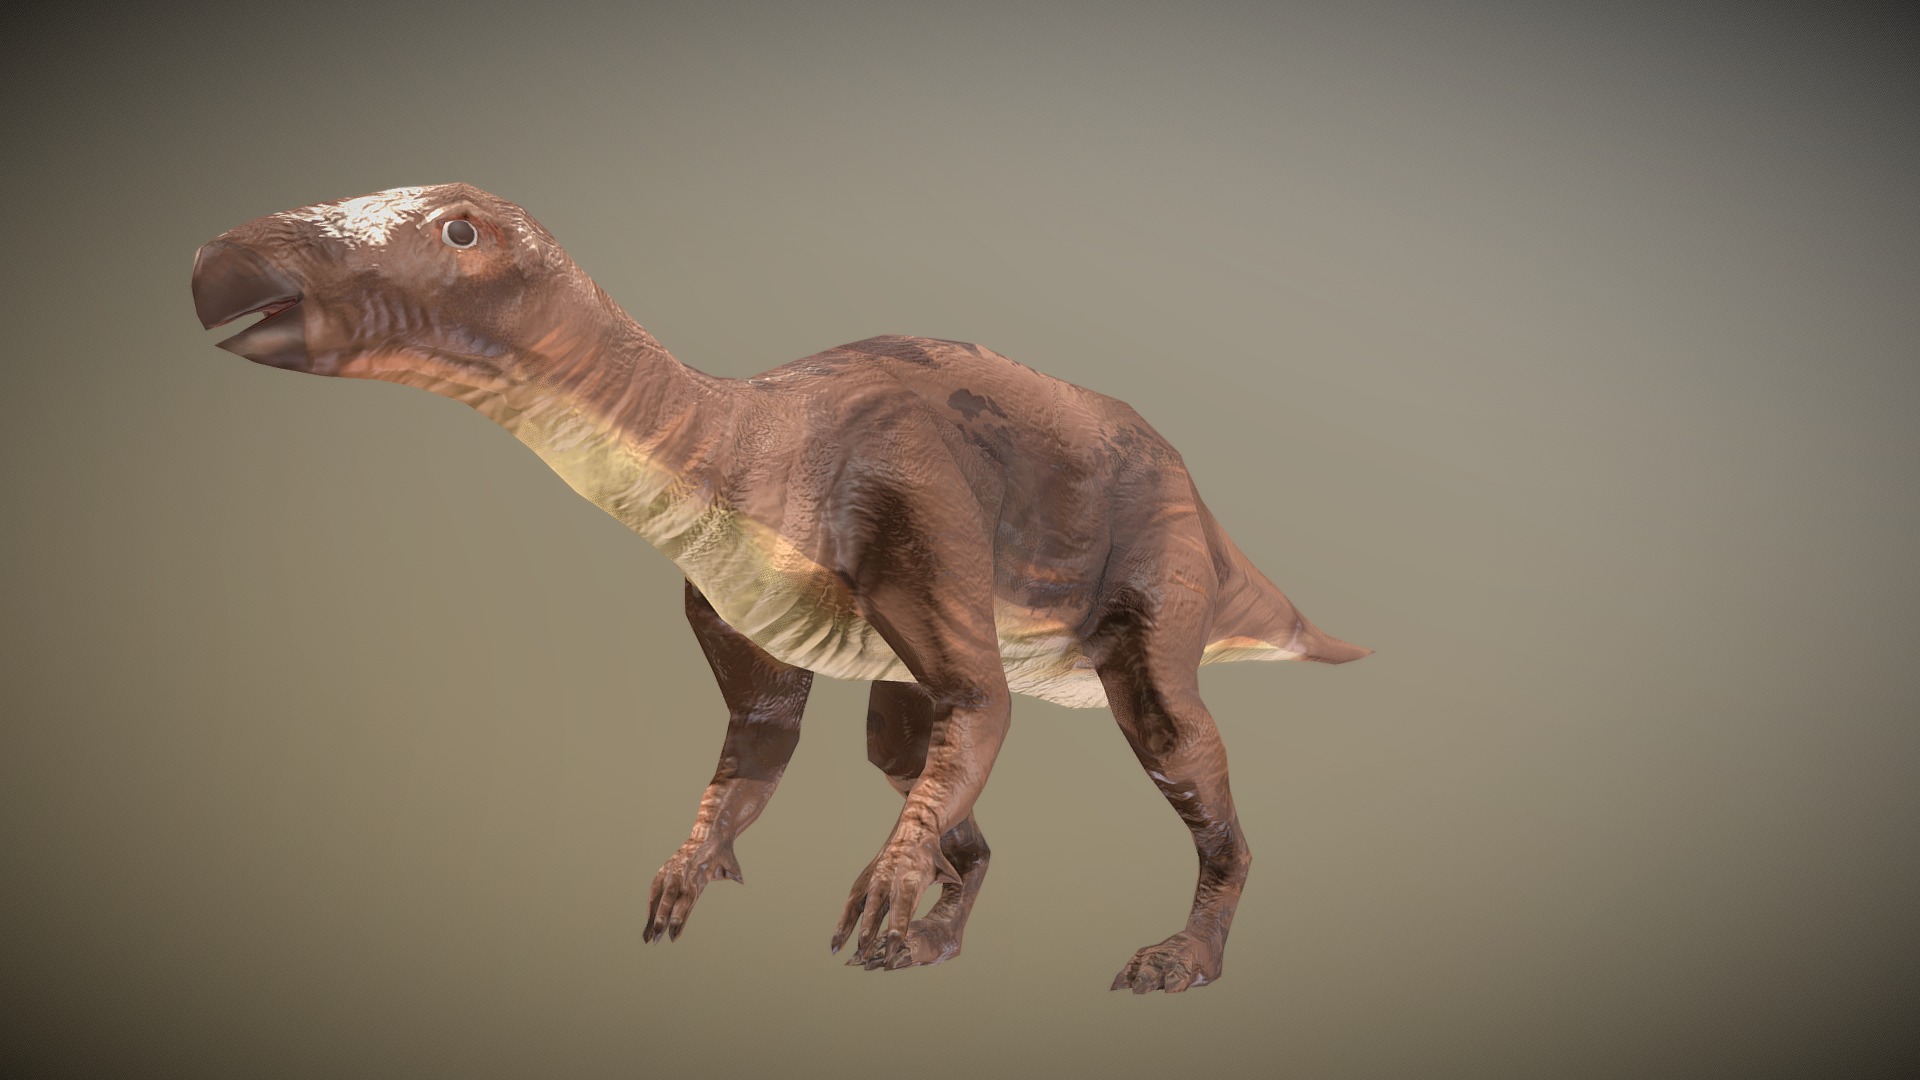 3D model Thai Dinosaur Siamodon - This is a 3D model of the Thai Dinosaur Siamodon. The 3D model is about a dinosaur with a human head.